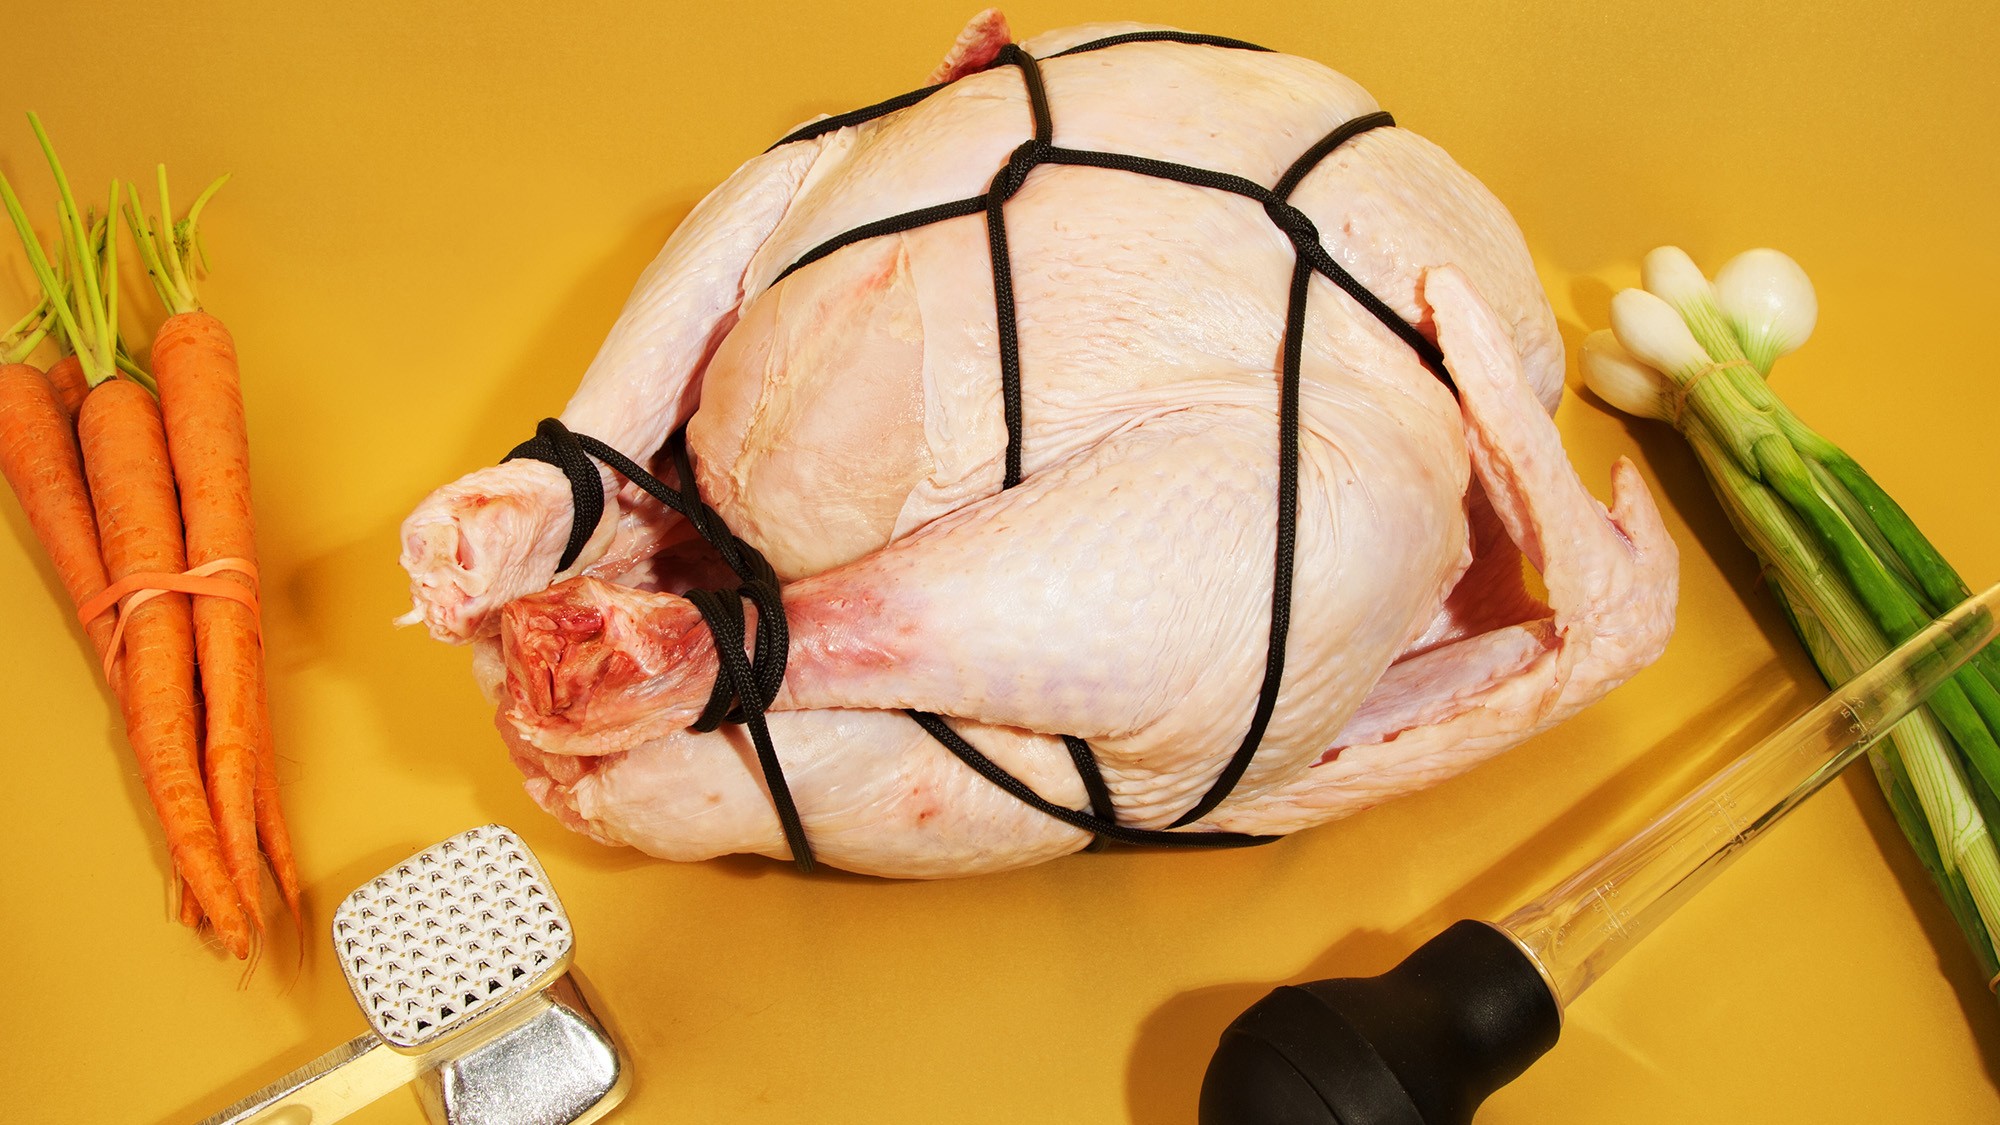 Funny Turkey Porn - Dirty Birds: Thanksgiving Food Porn, Literally - VICE